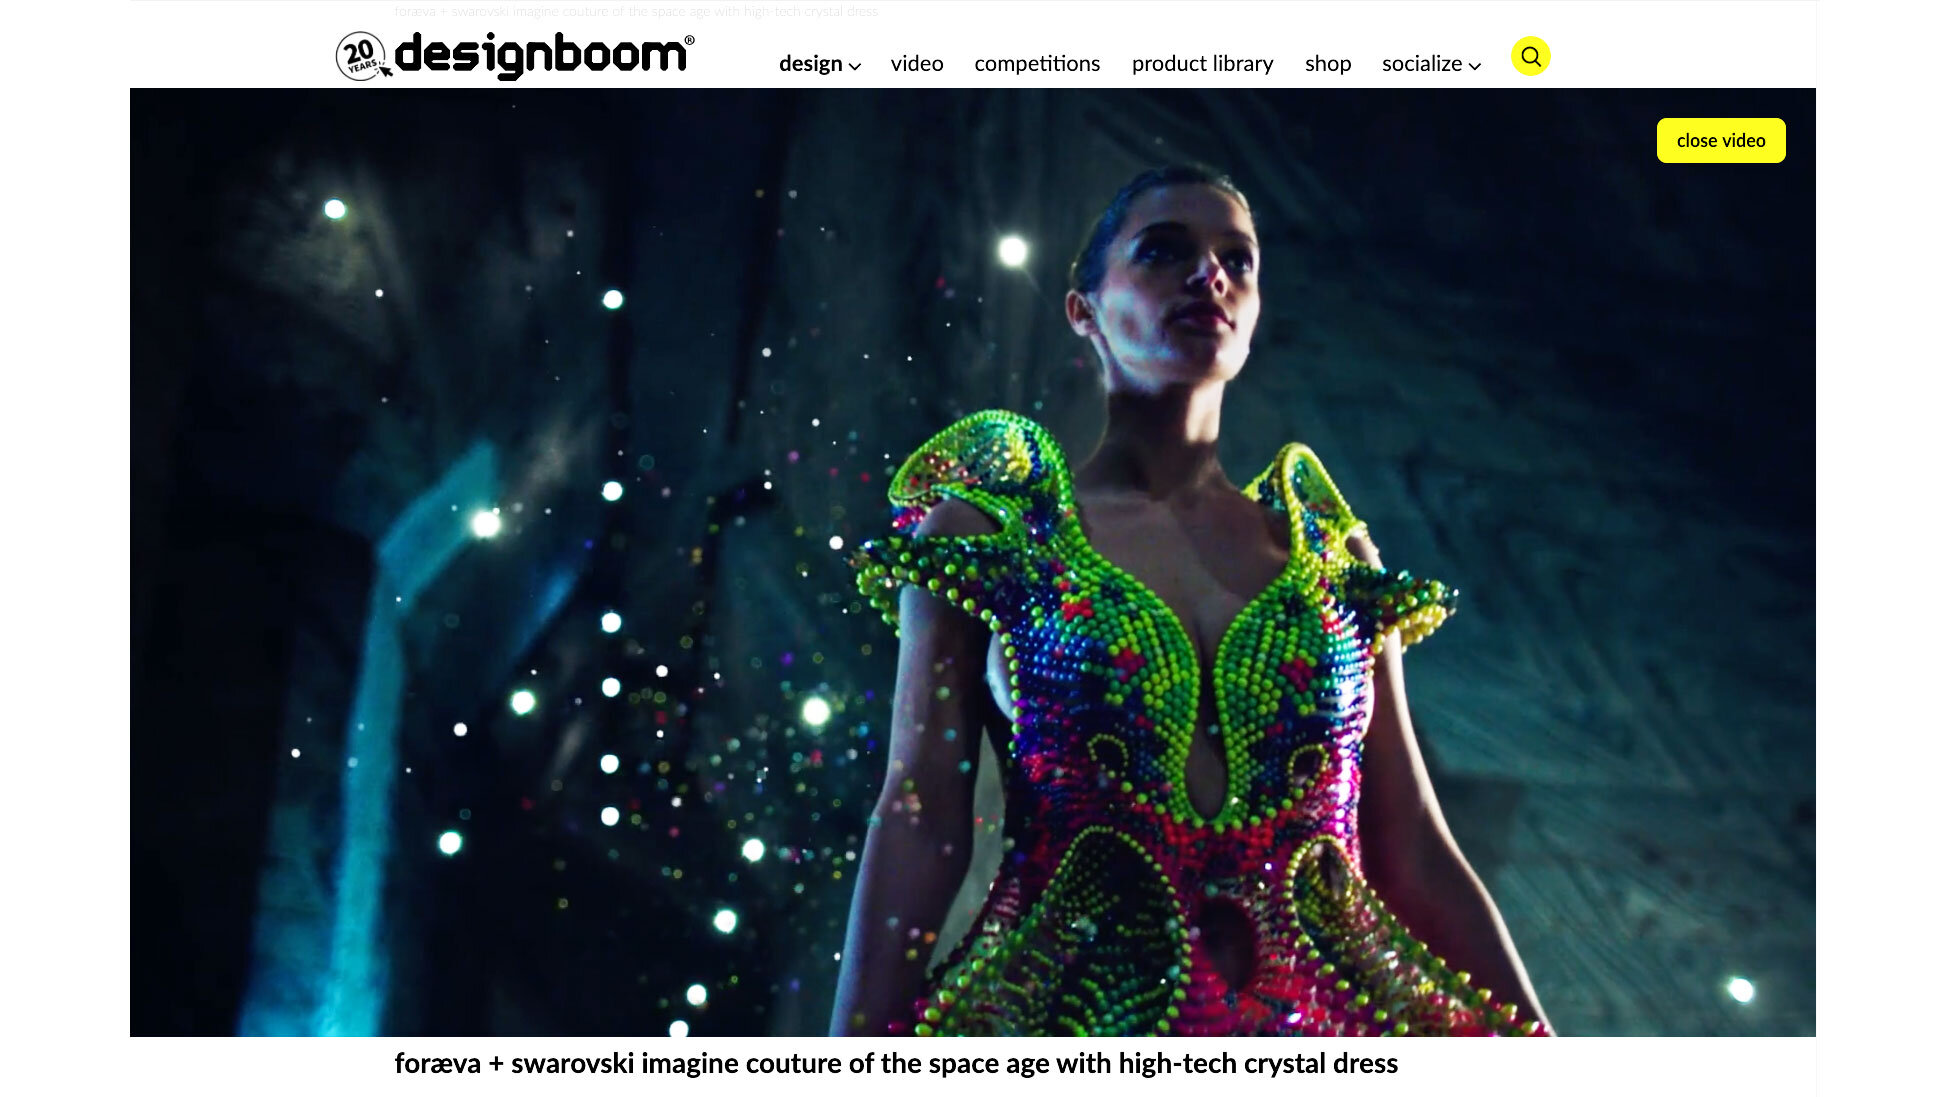 Imagine Fashion Designer - release date, videos, screenshots